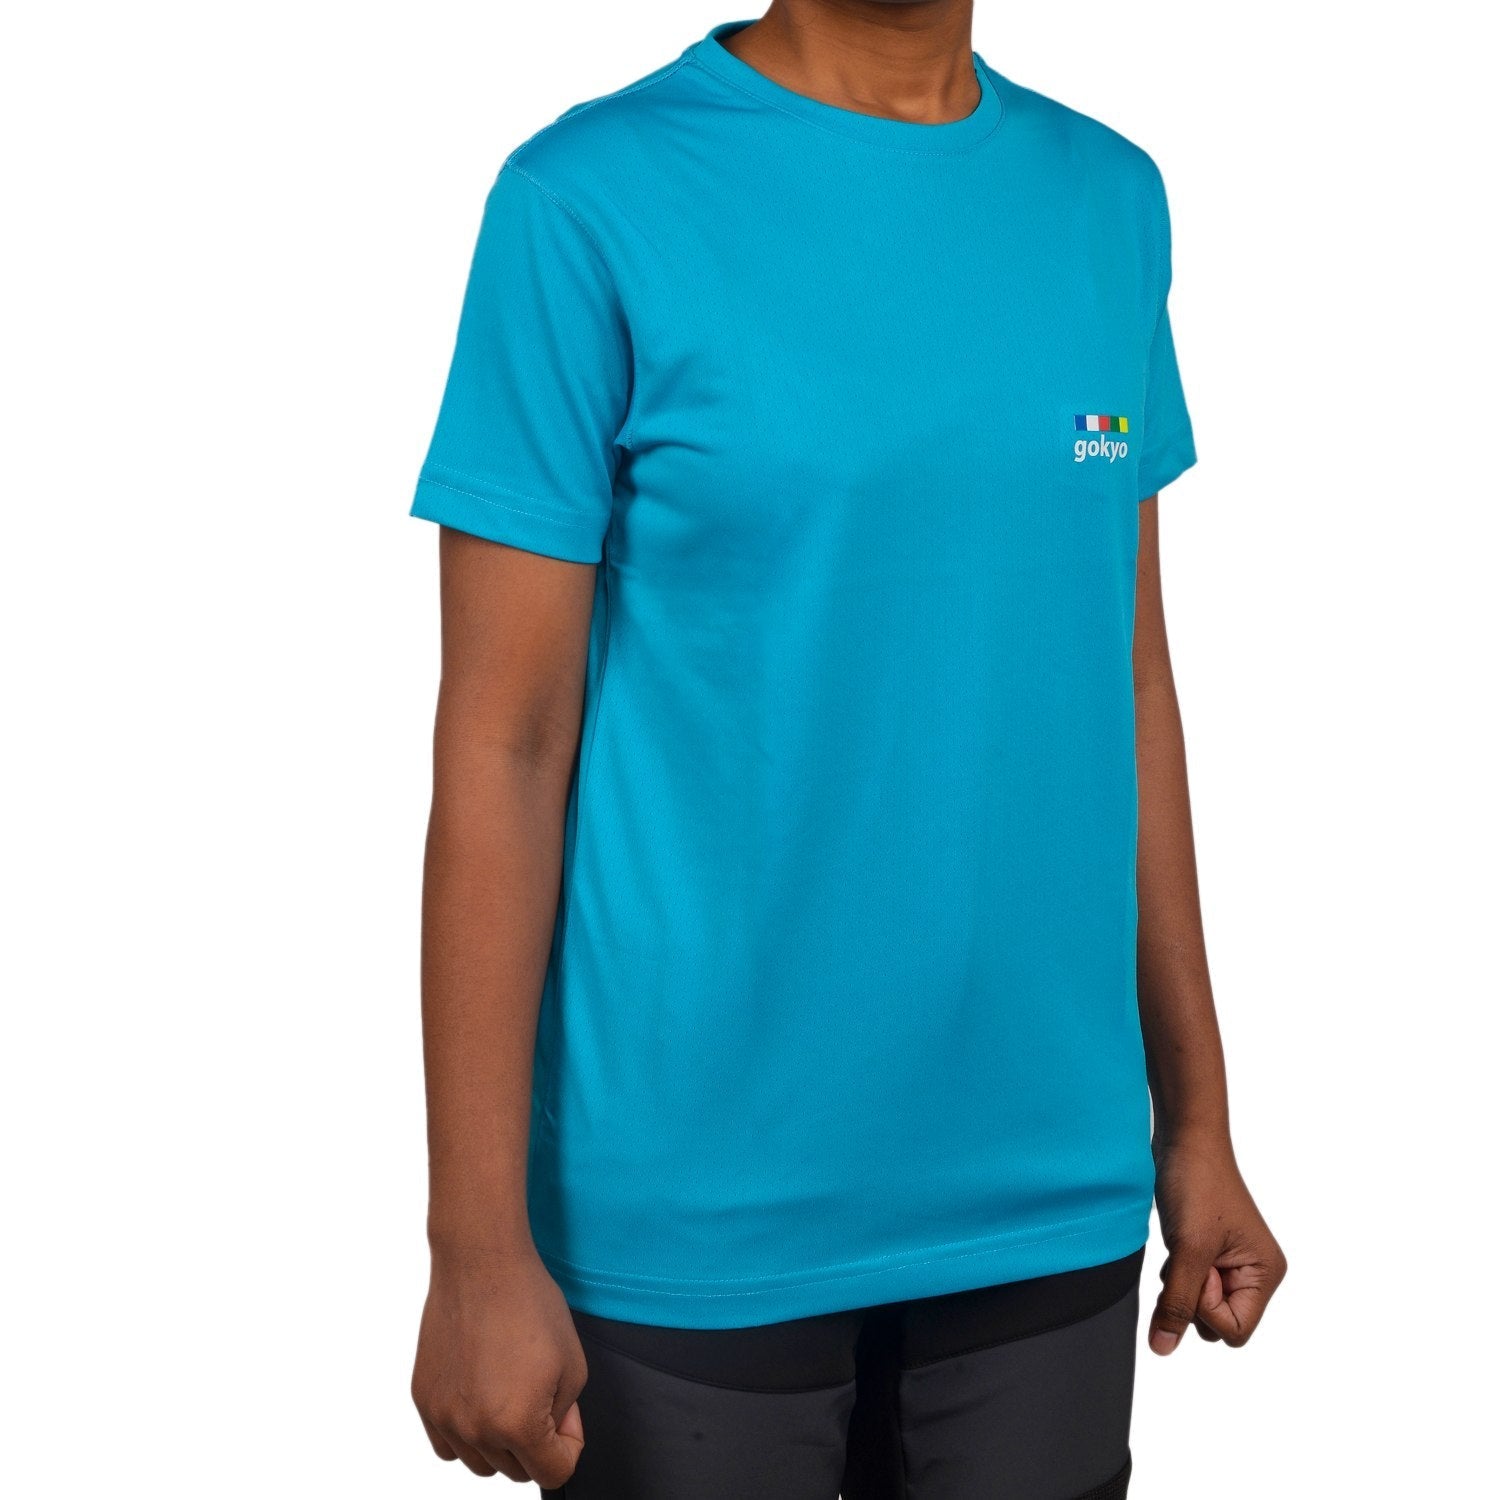 Buy Gokyo Kalimpong Activewear DryFit Tshirt - Women | Trekking & Hiking T-shirts at Gokyo Outdoor Clothing & Gear